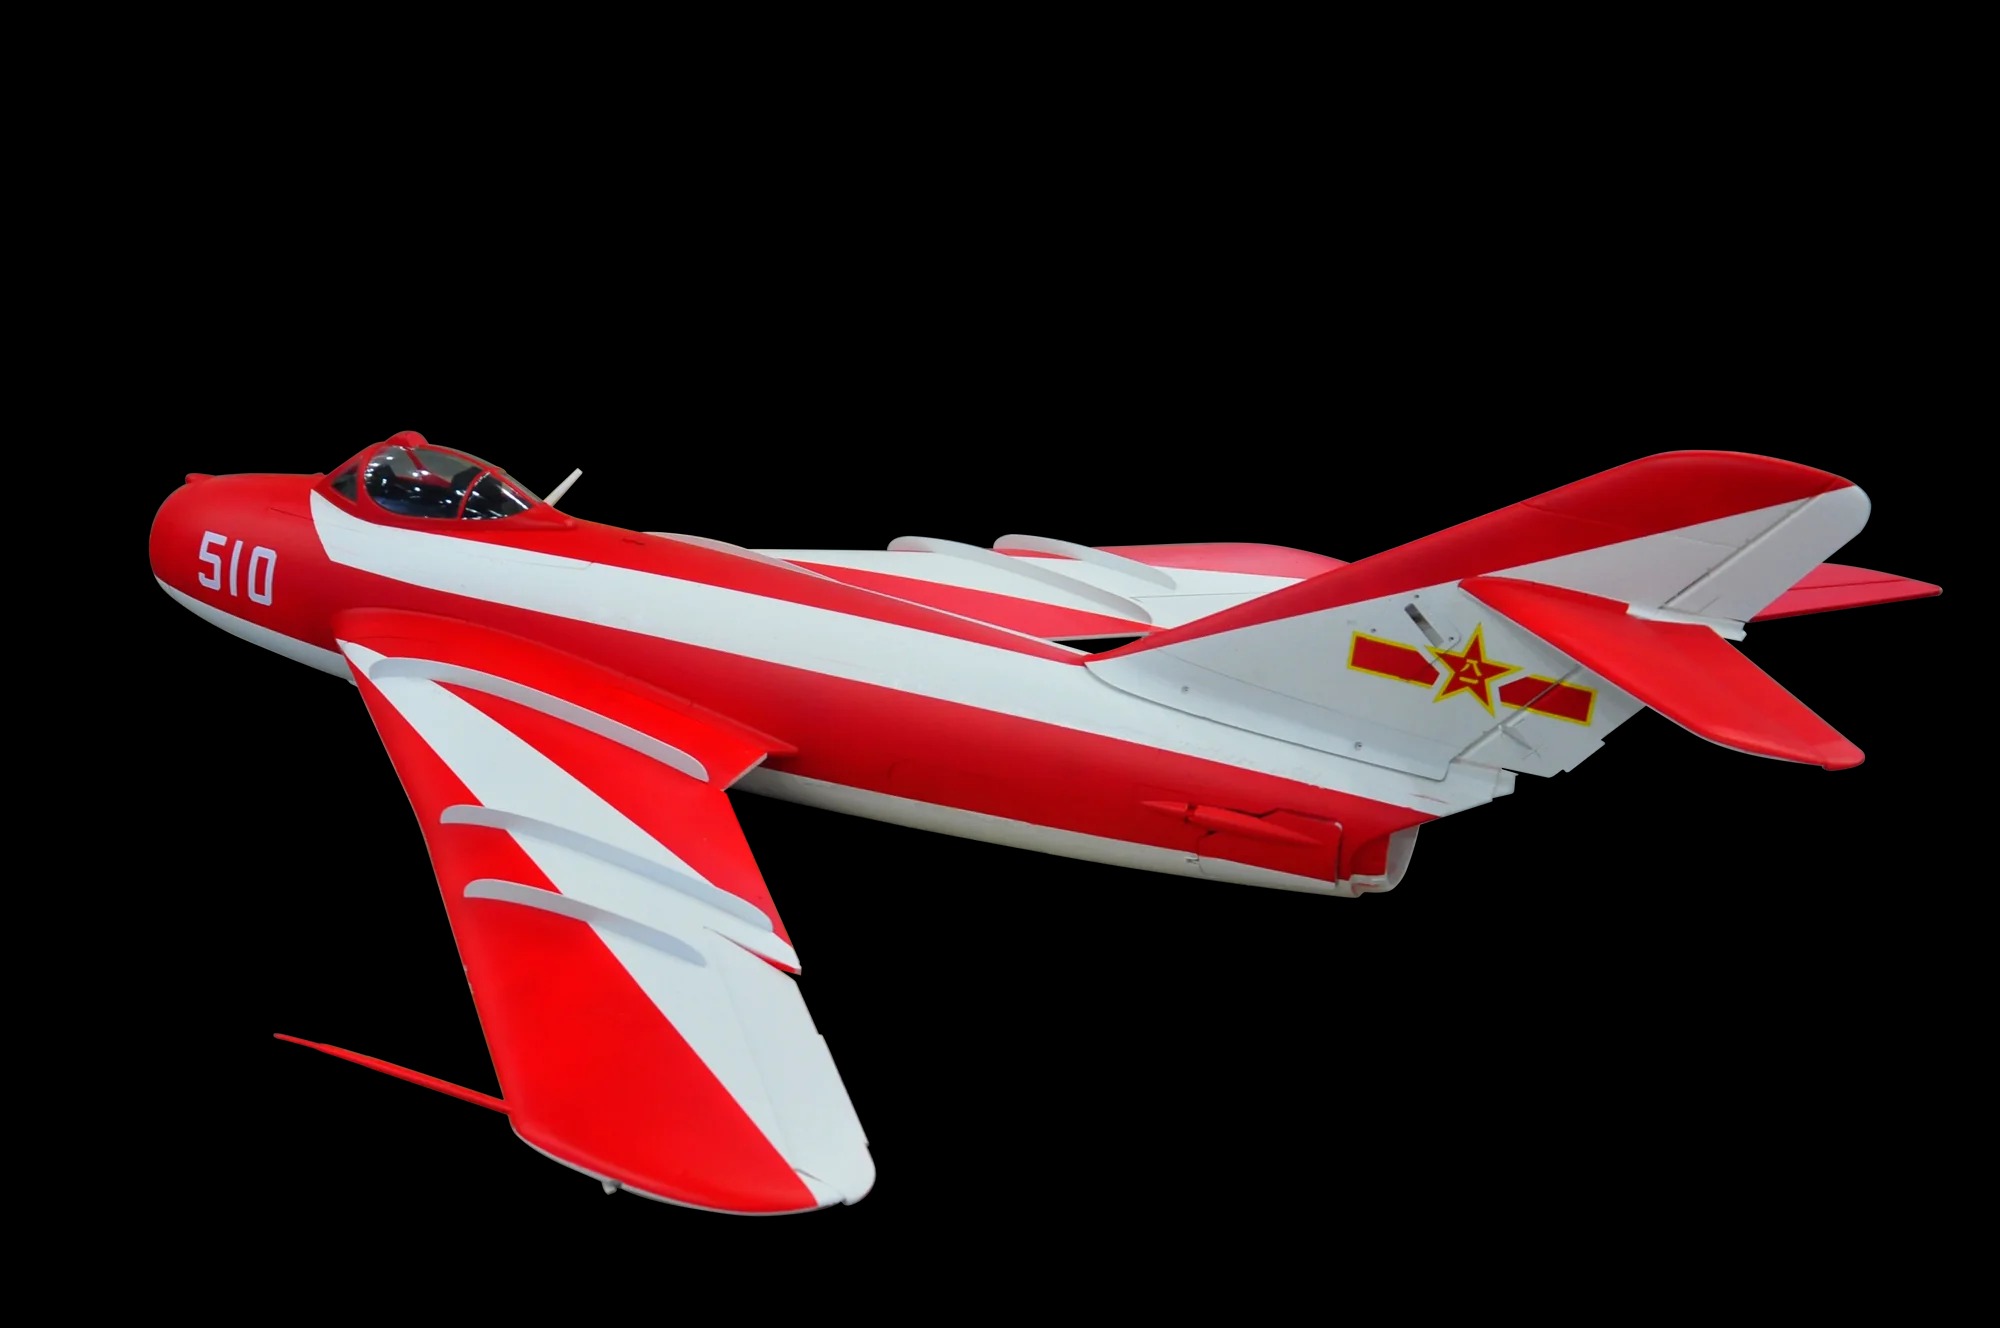 MiG-17 90mm Global AeroFoam